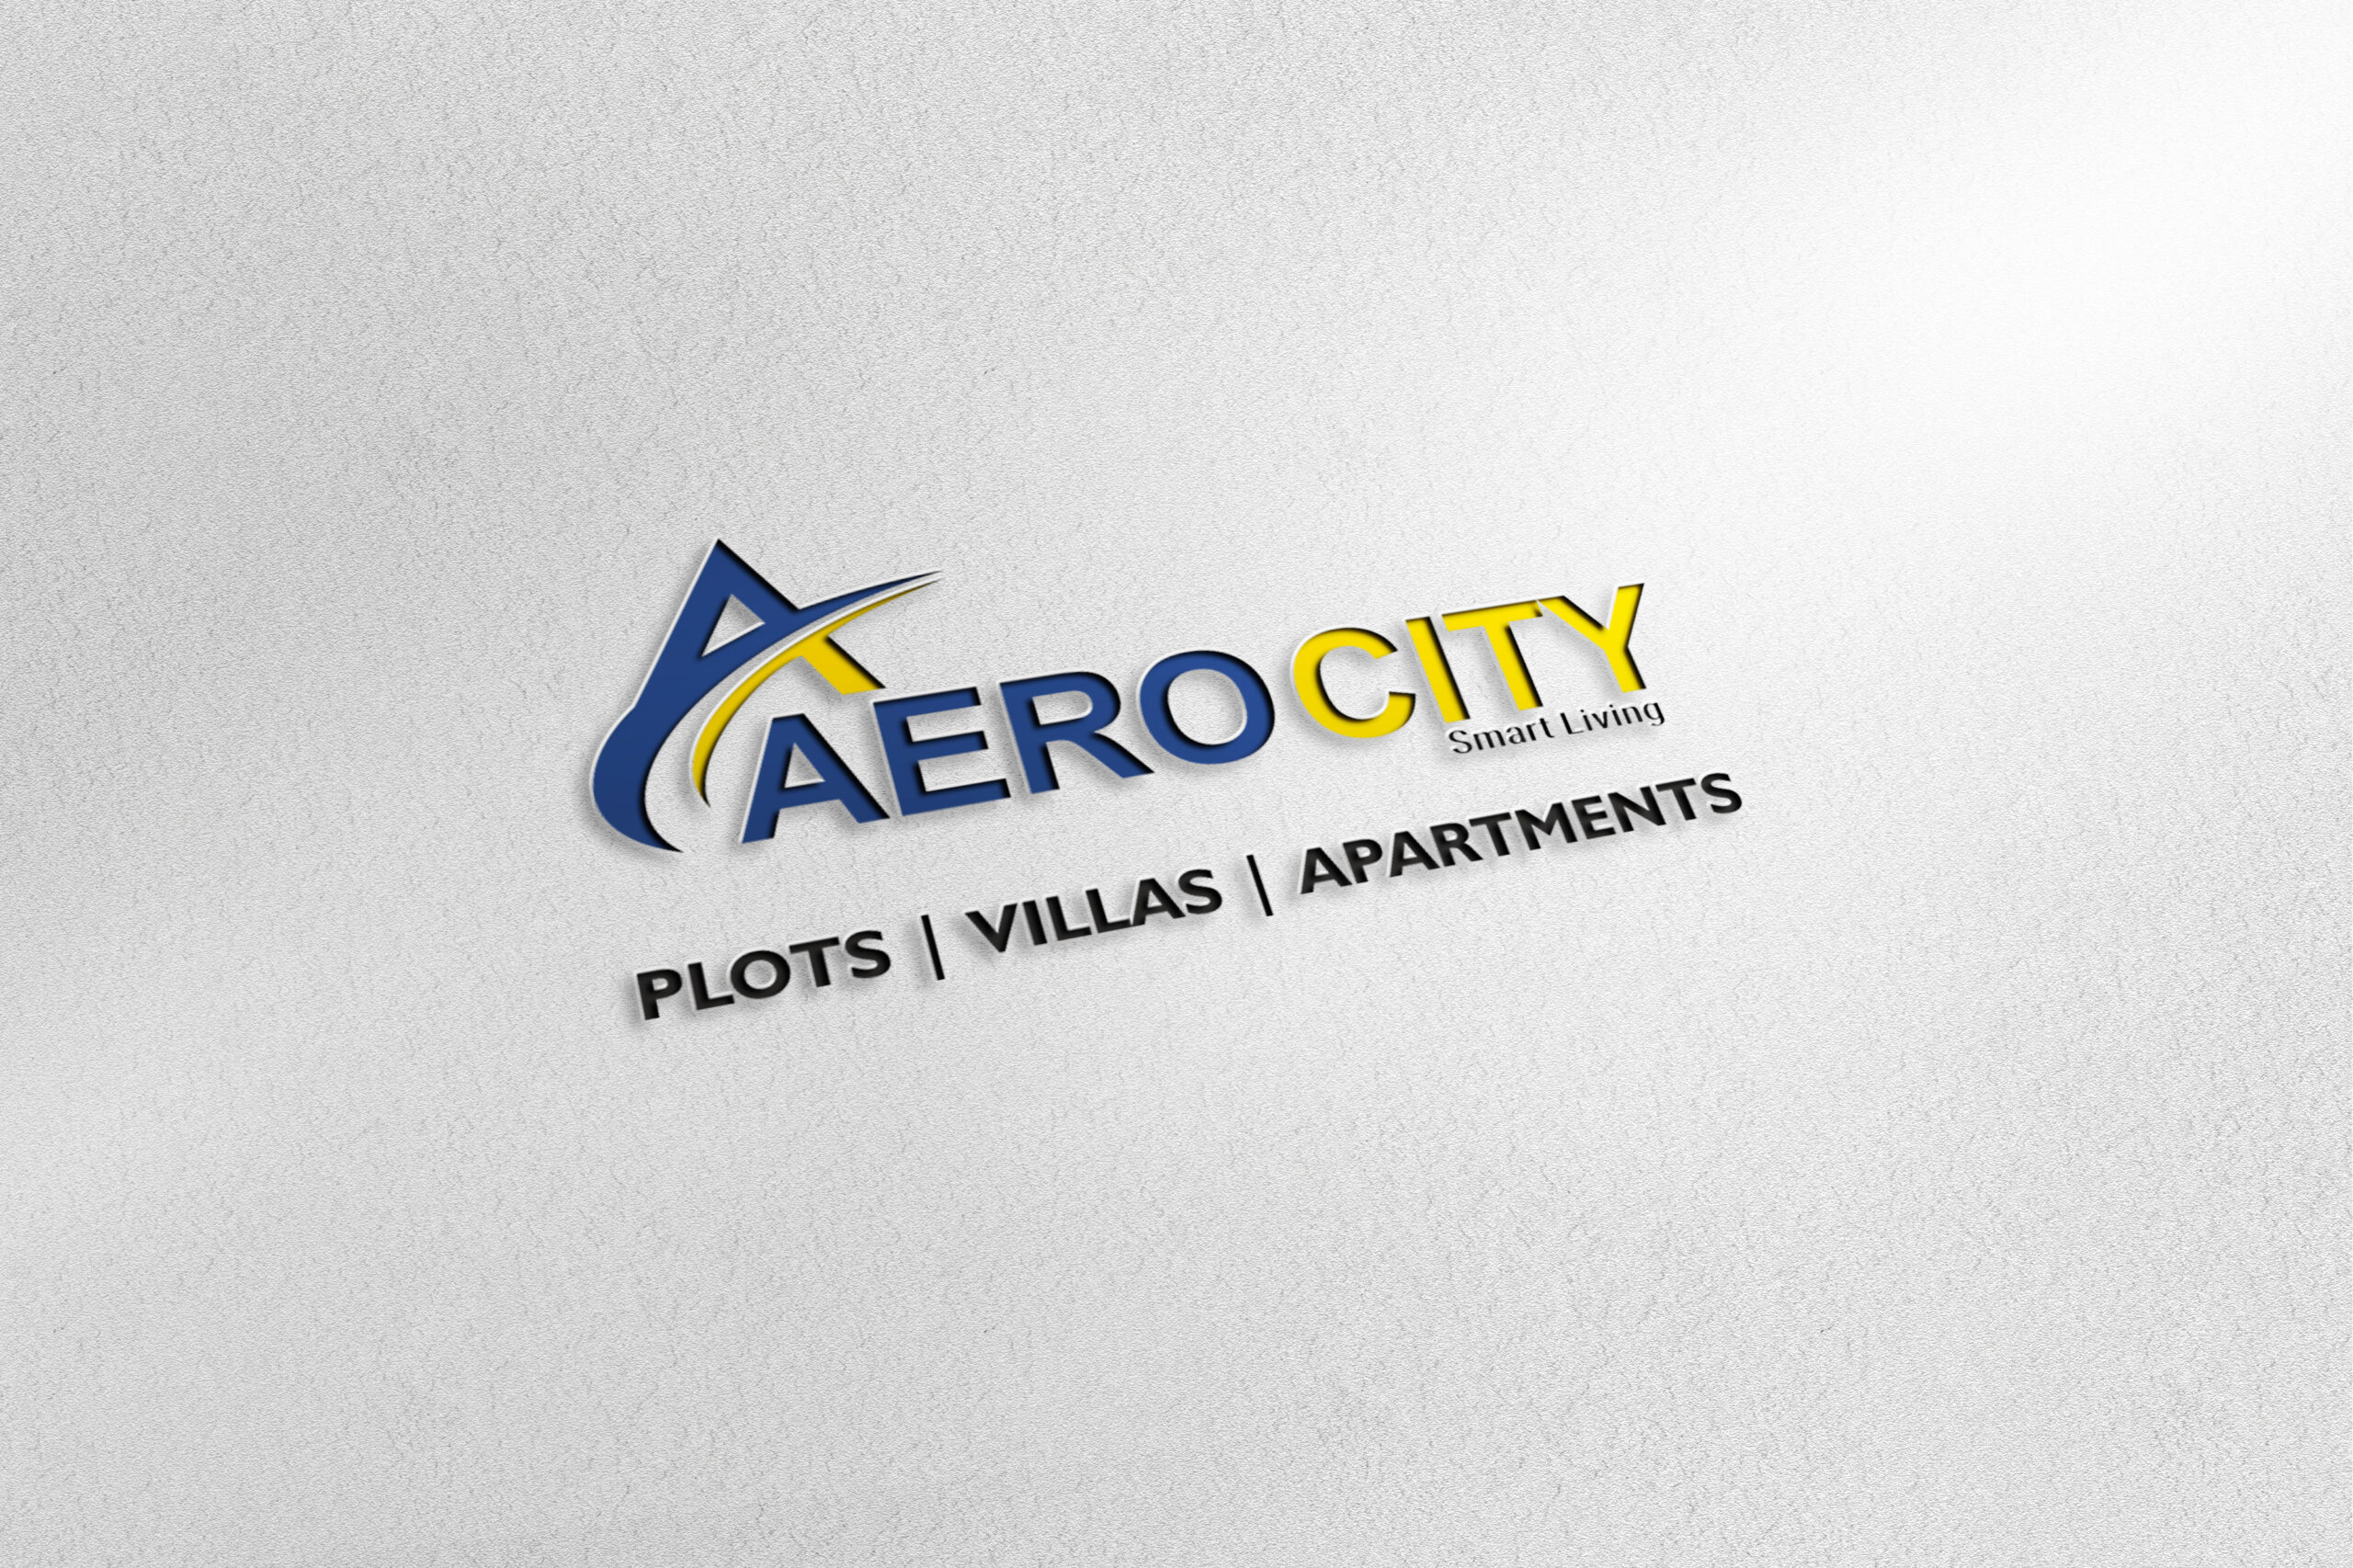 Aerocity - Brand toniq